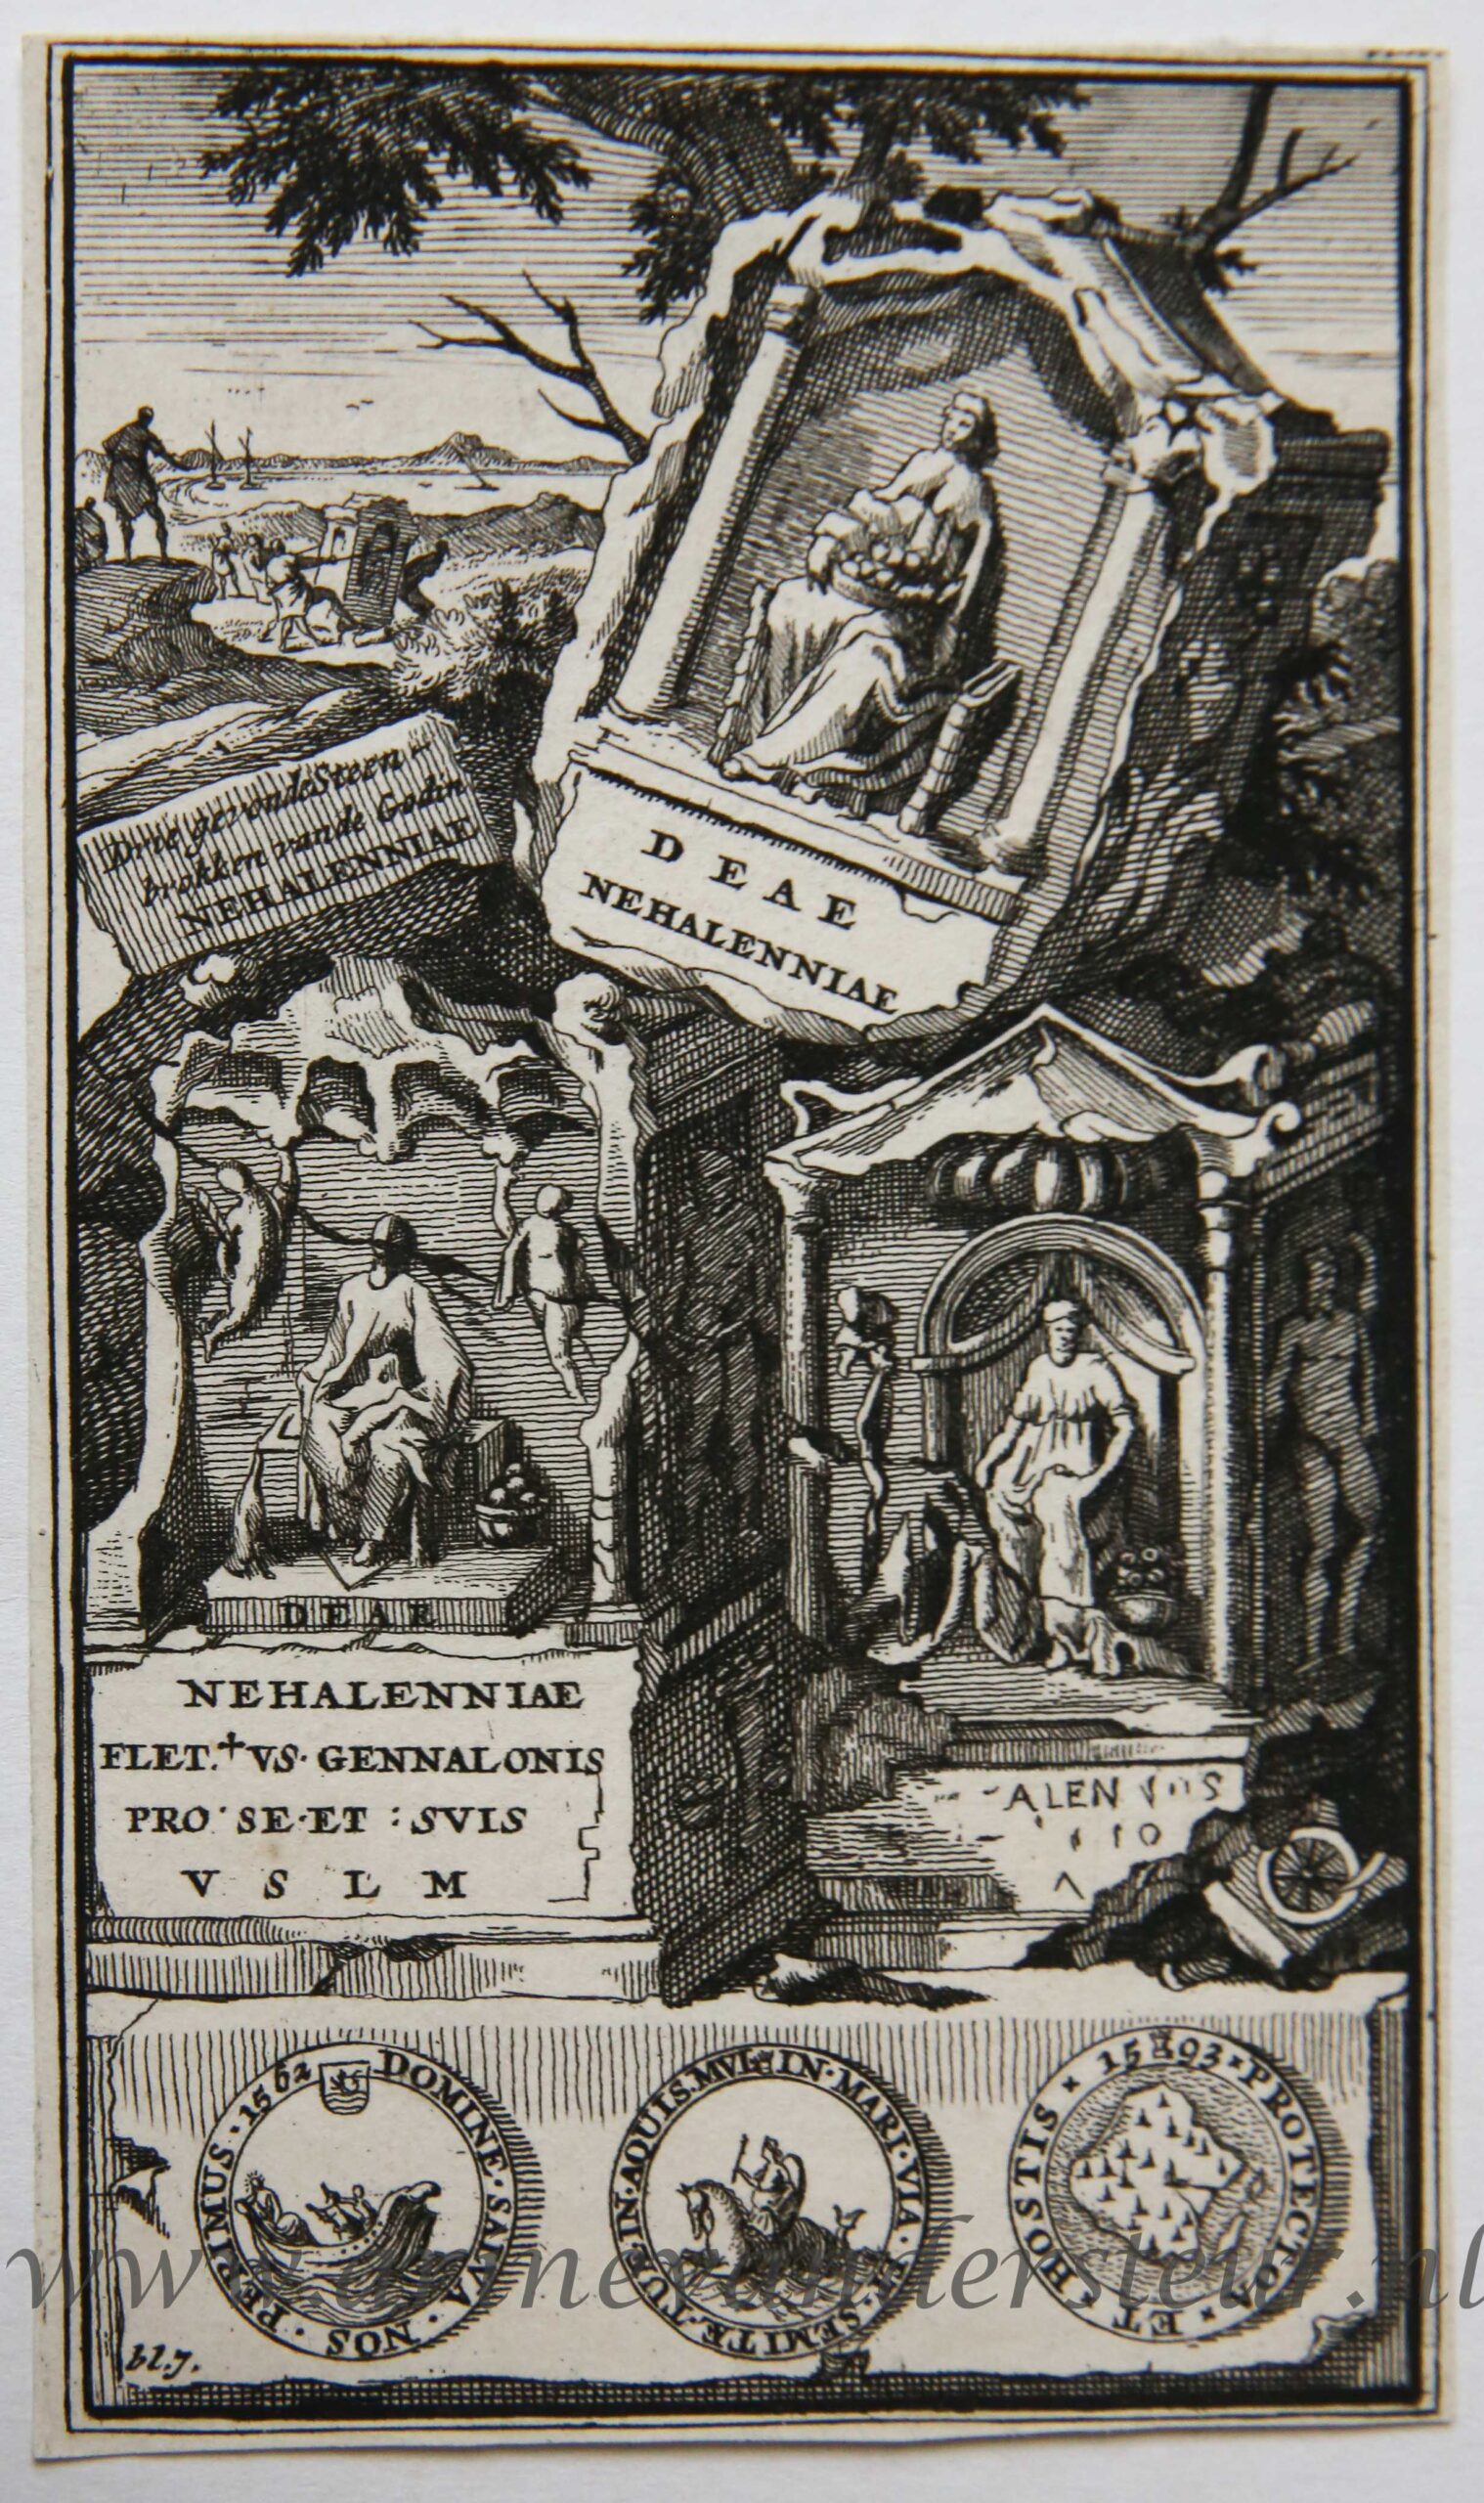 [Antique print, etching] Three Nehalennia altars found near Domburg, published ca. 1700-1715, 1 p.